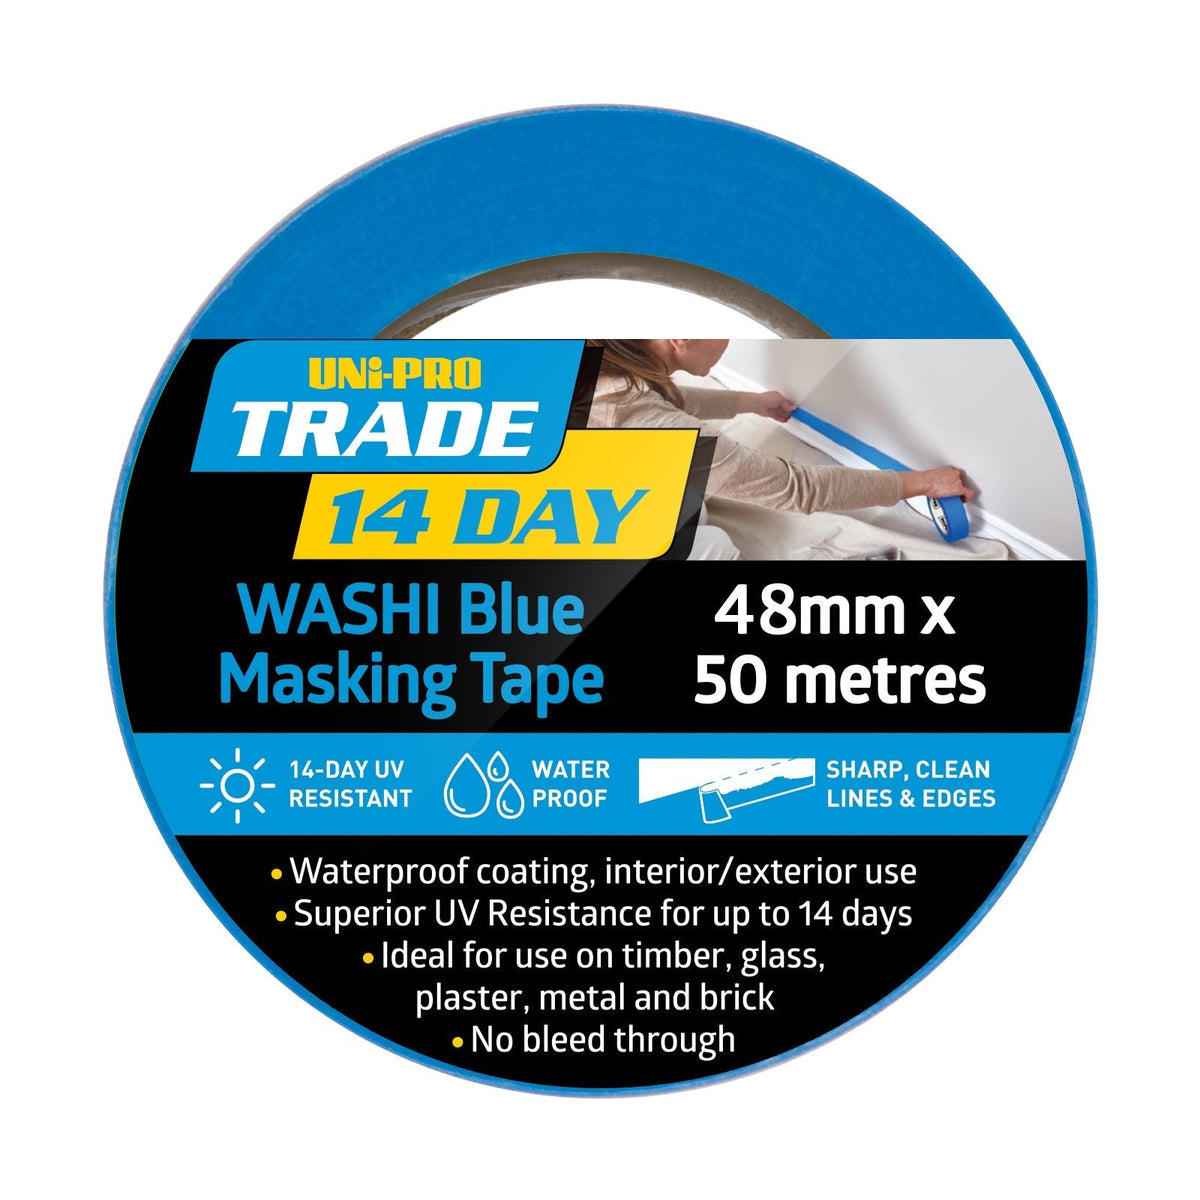 70848-Trade-14-Day-Blue-Washi-Masking-Tape-48mm-x-50m-RGB.jpg